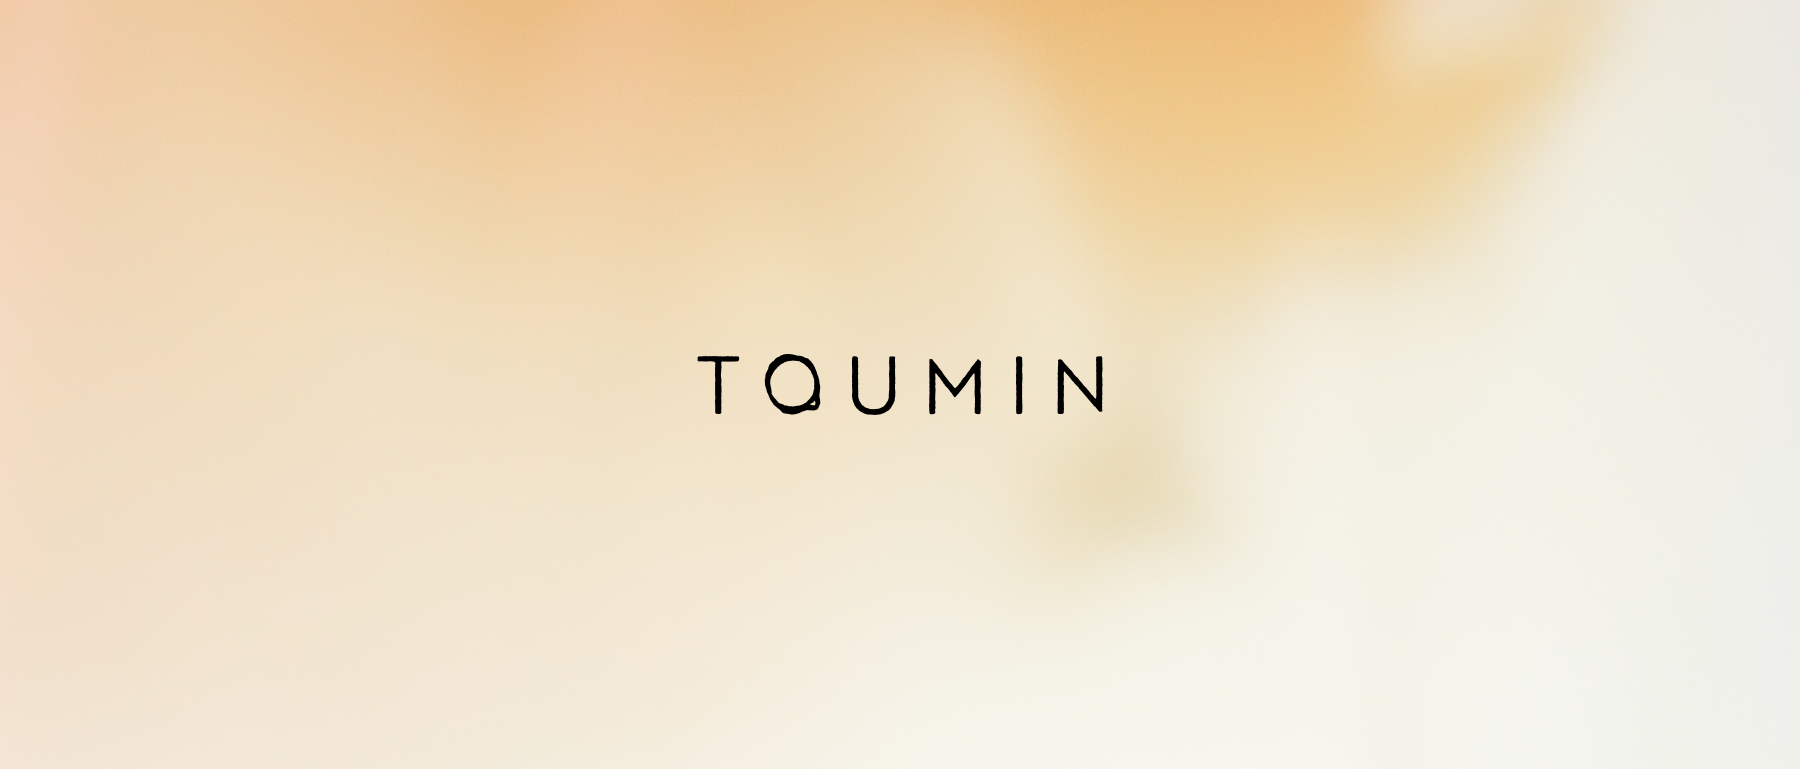 TOUMIN's image 1